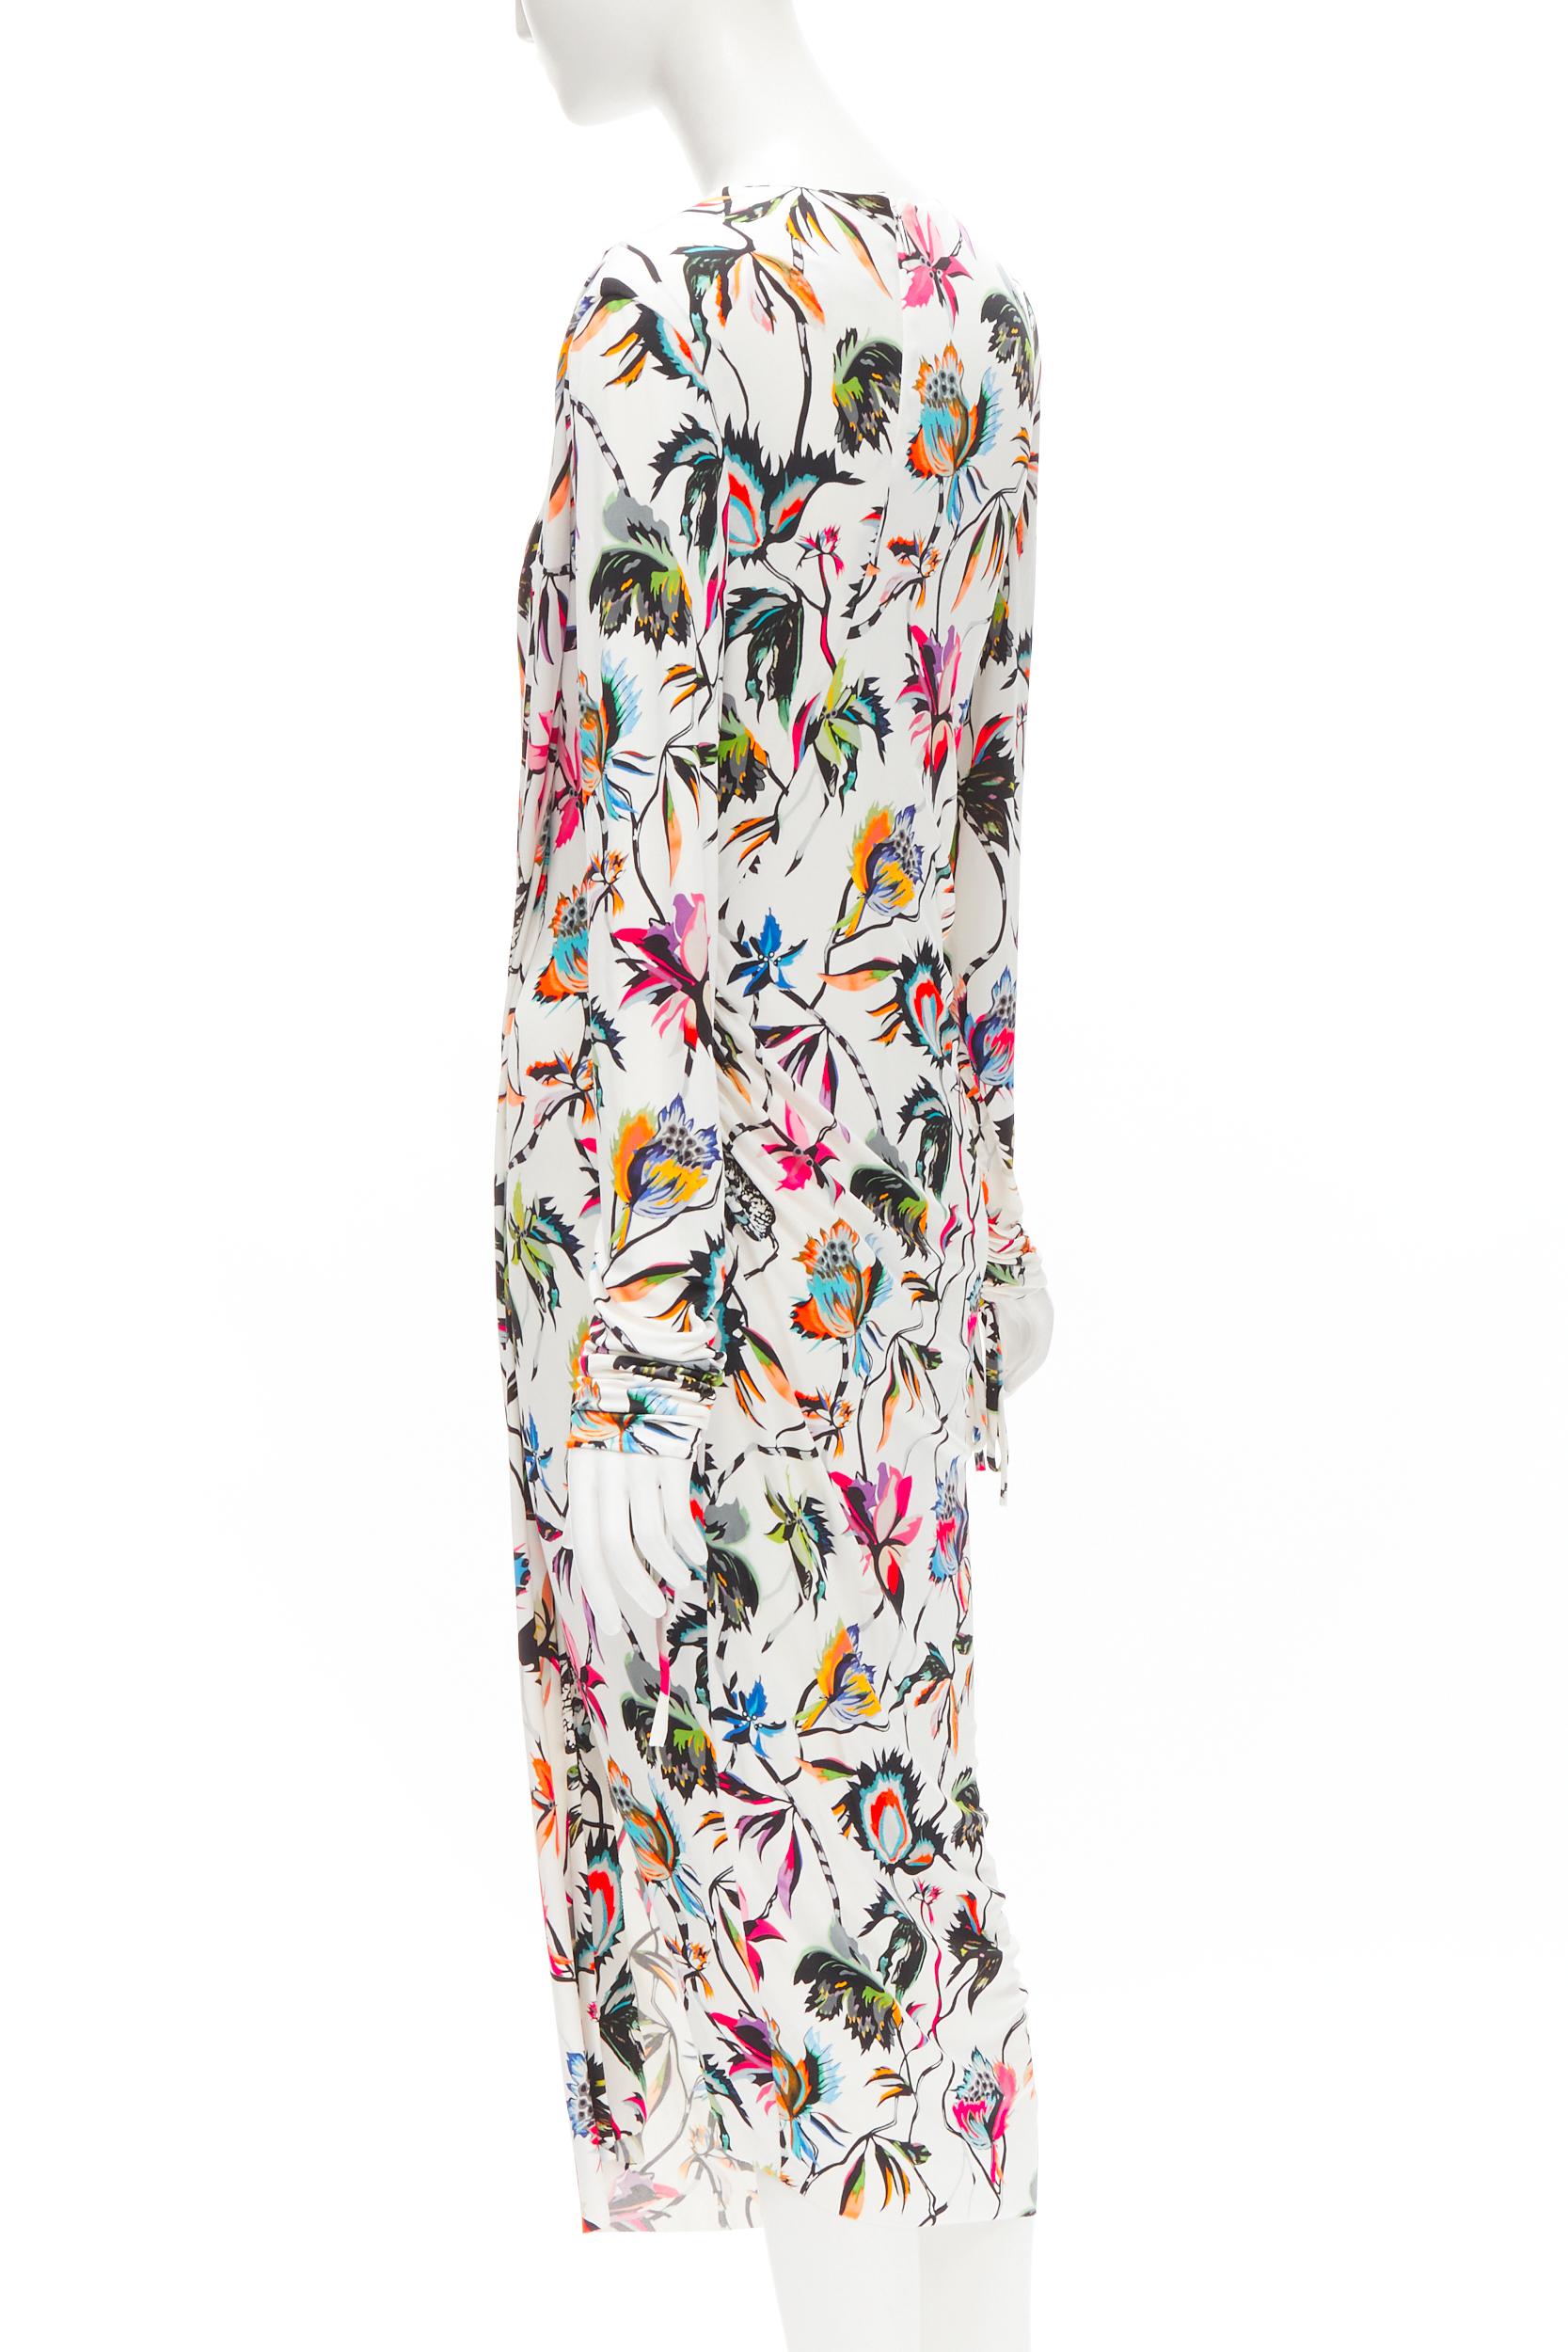 Women's JASON WU white tropical floral print twist draped viscose dress M For Sale